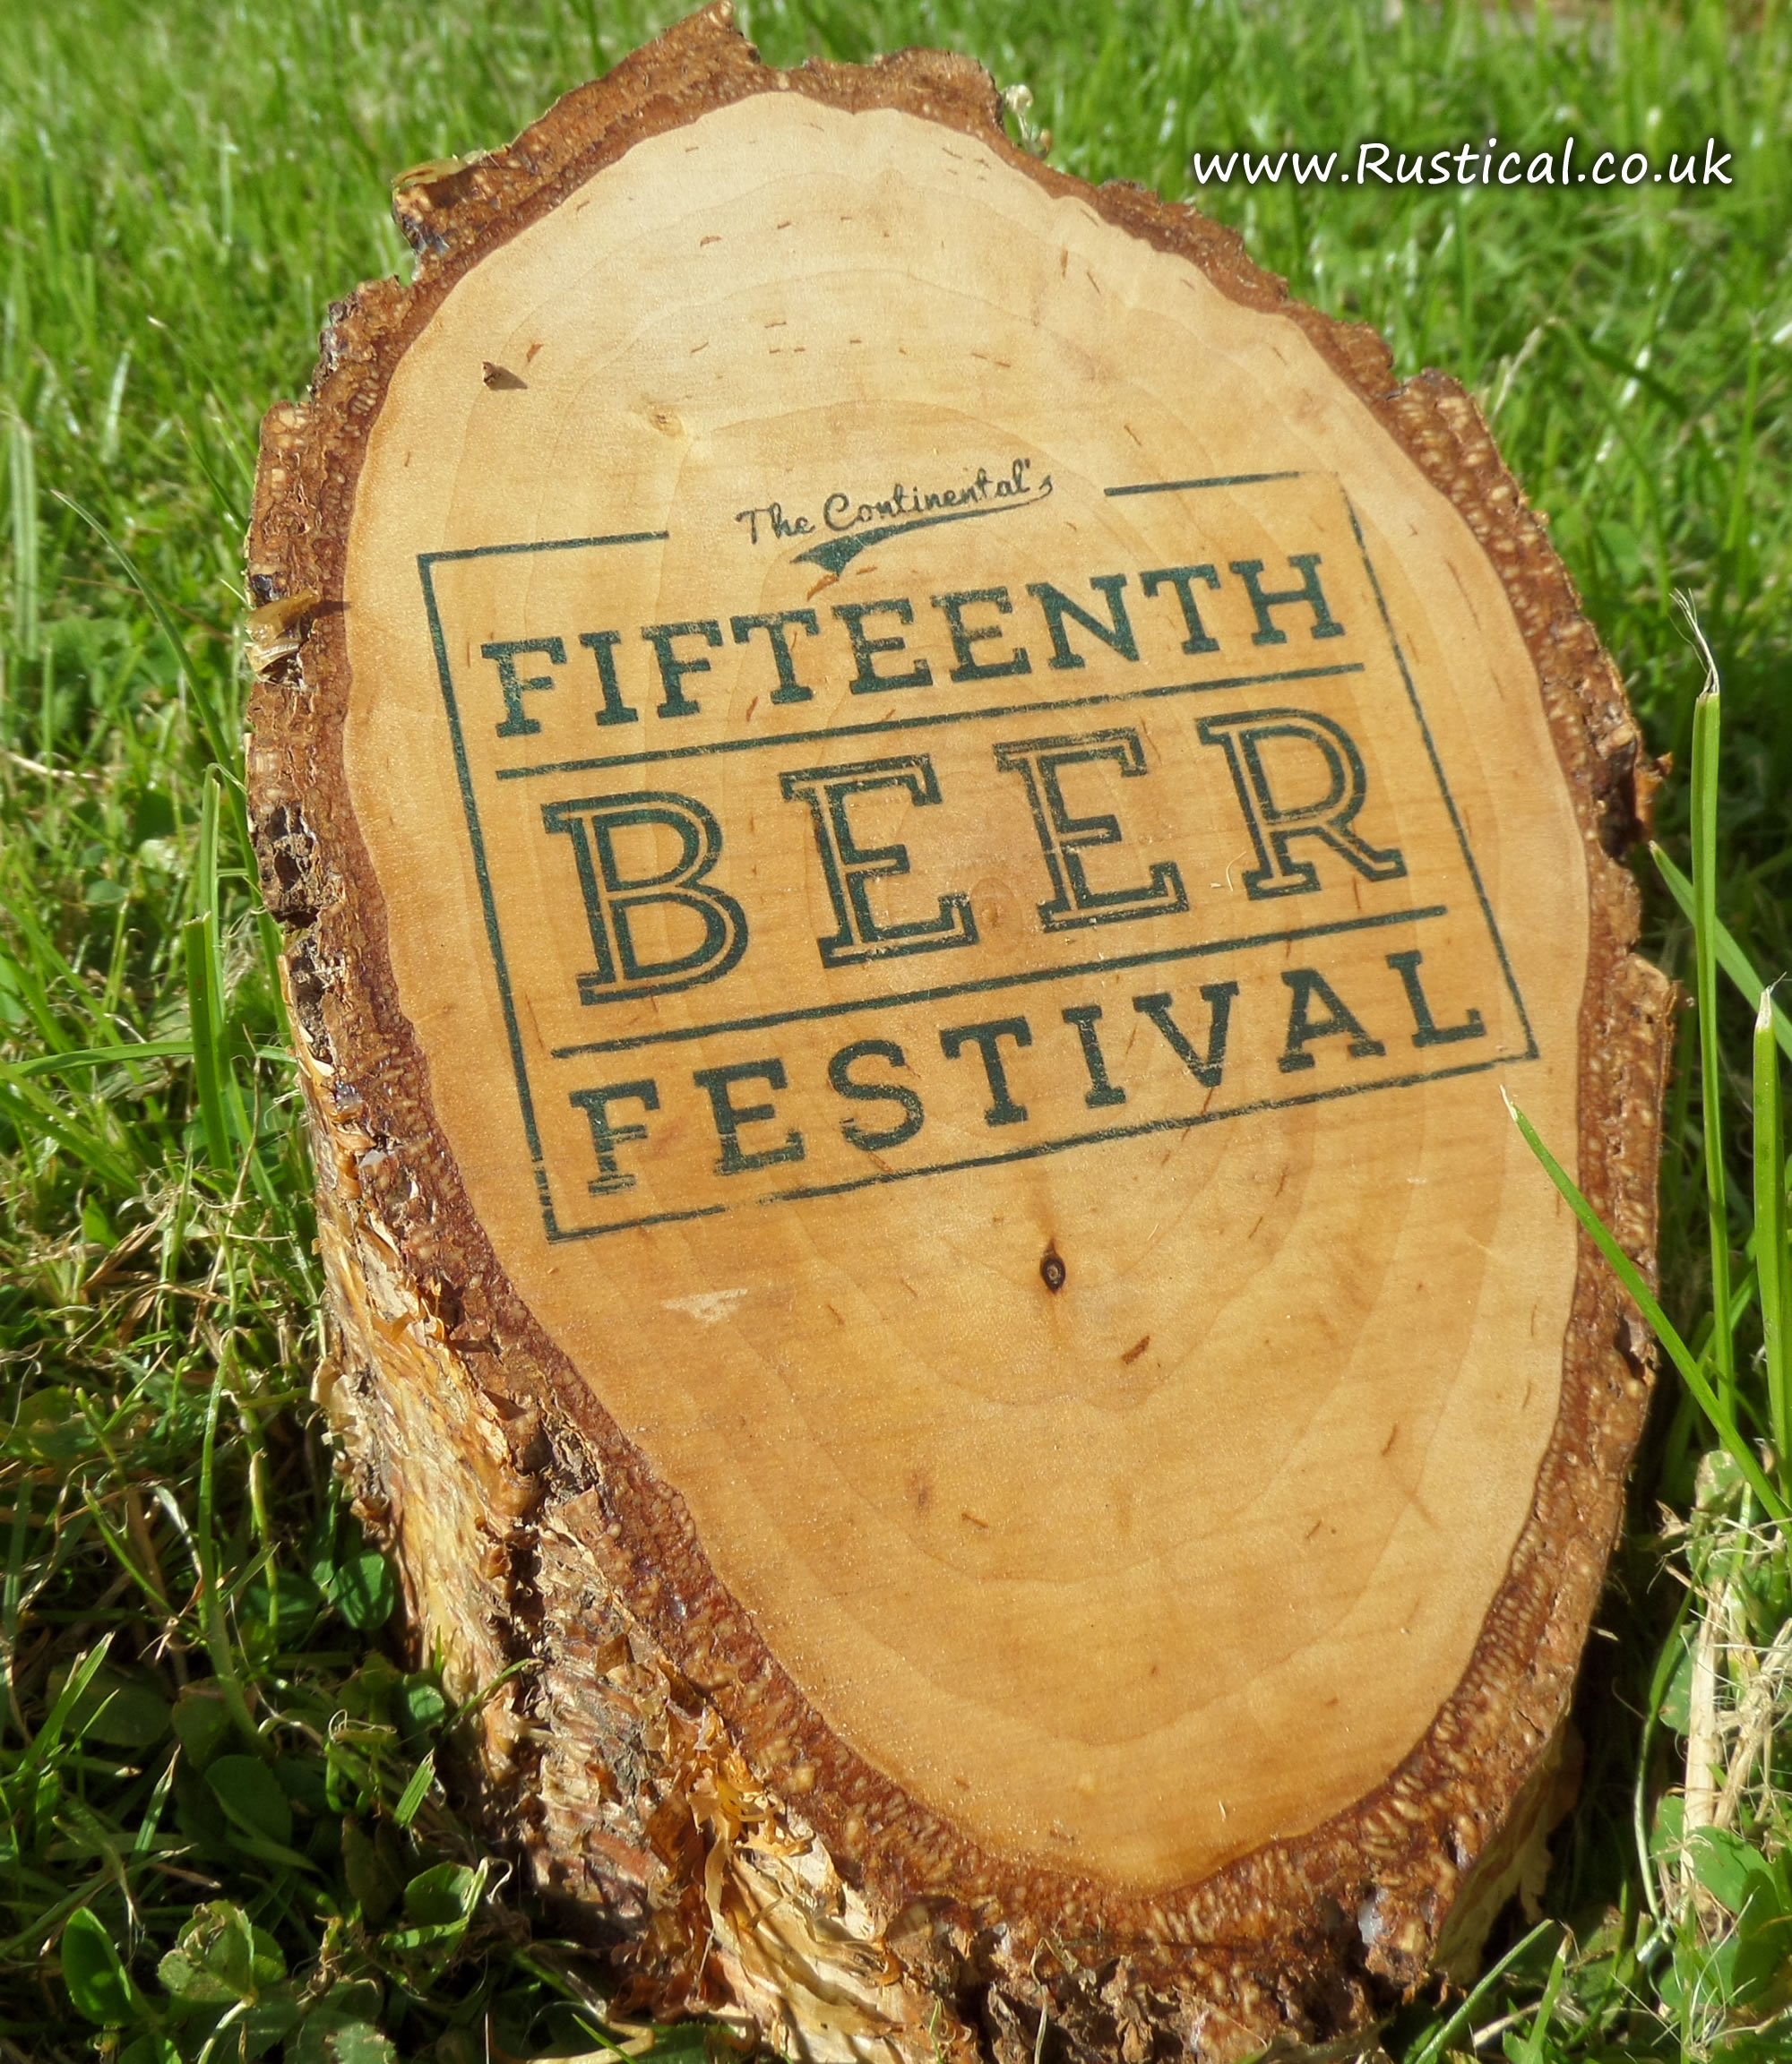 An event logo printed onto a birch log